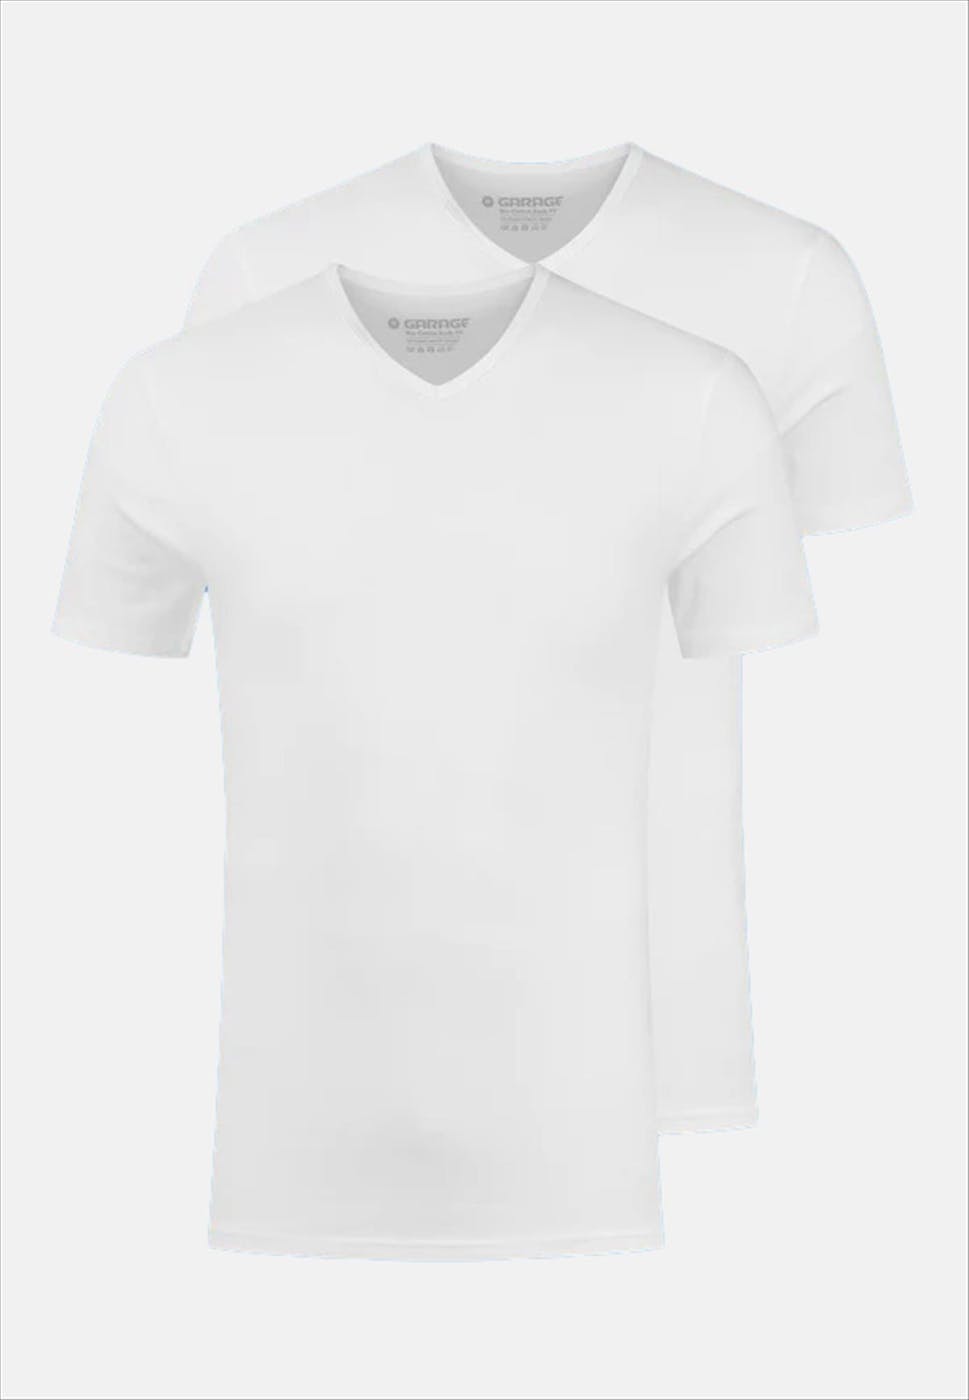 Garage - Witte 2-pack Body Fit V-neck T-shirts